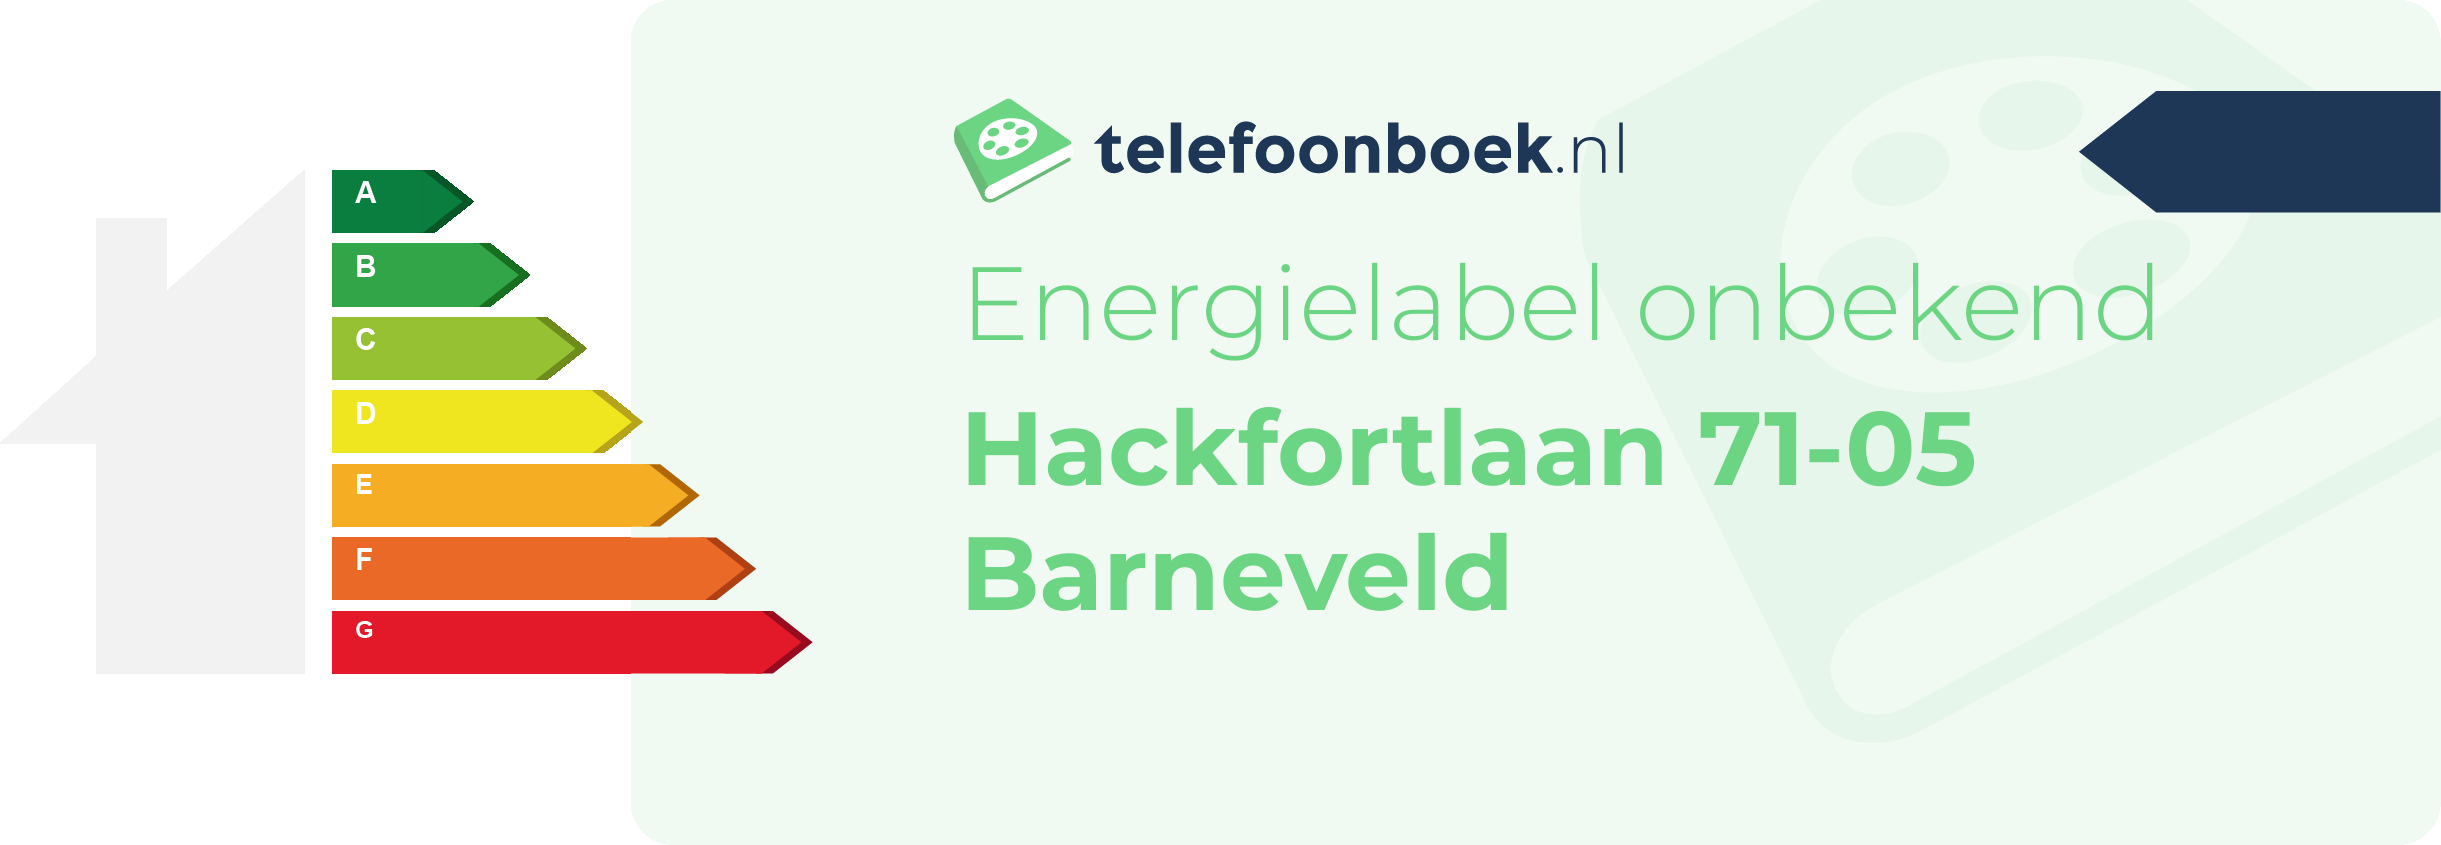 Energielabel Hackfortlaan 71-05 Barneveld